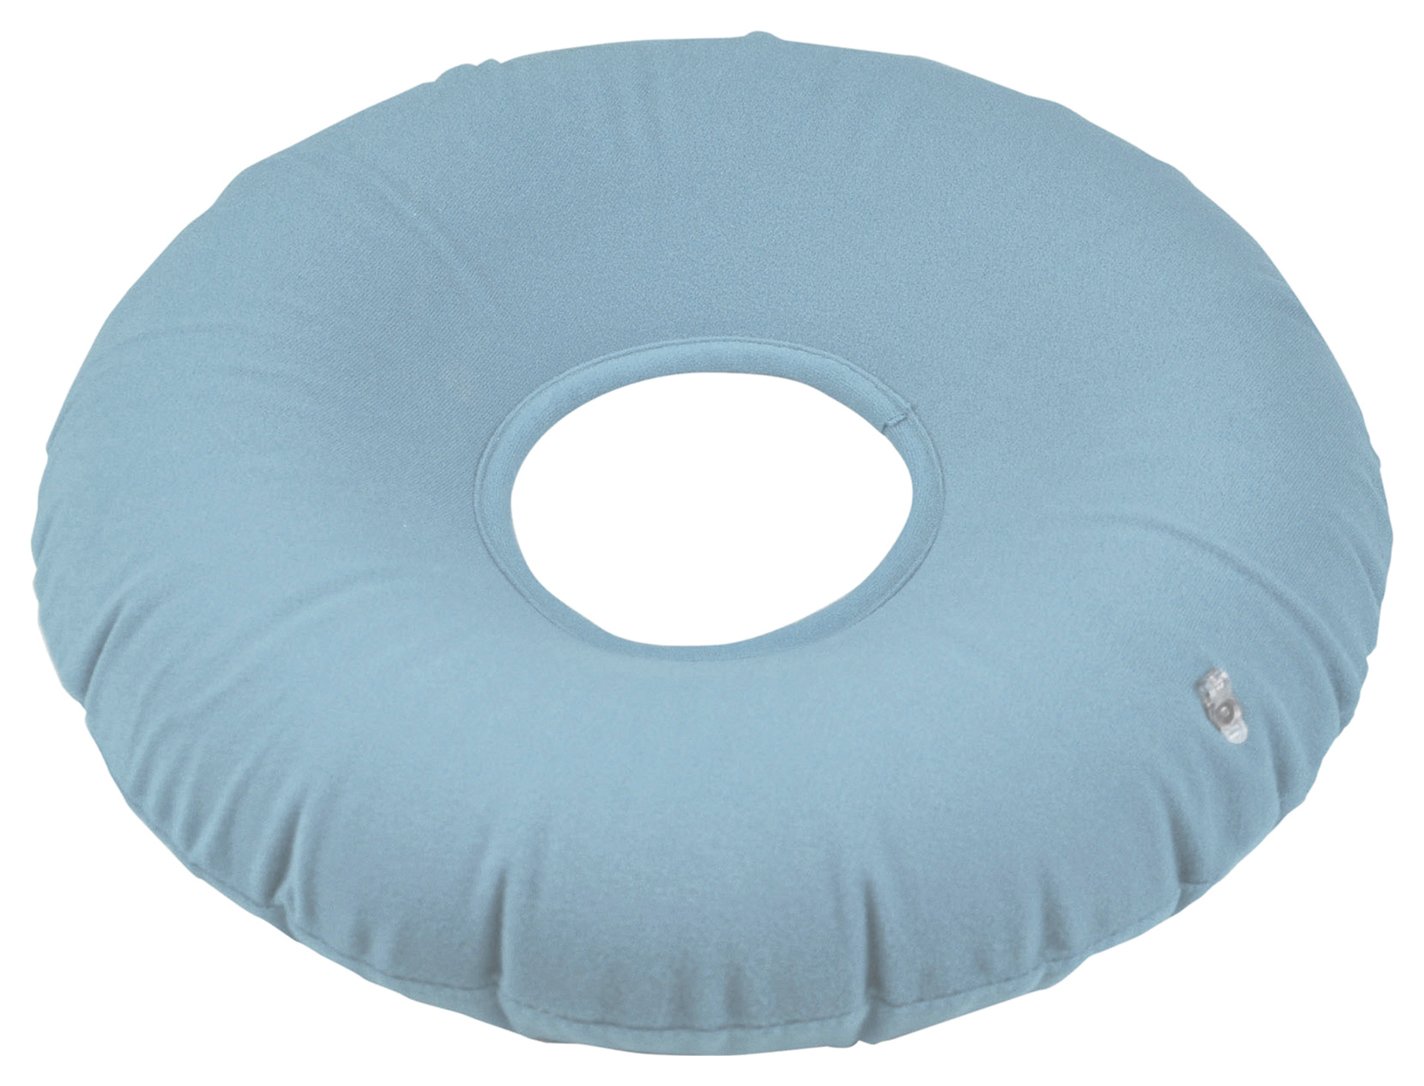 Aidapt Inflatable Ring Cushion - Blue